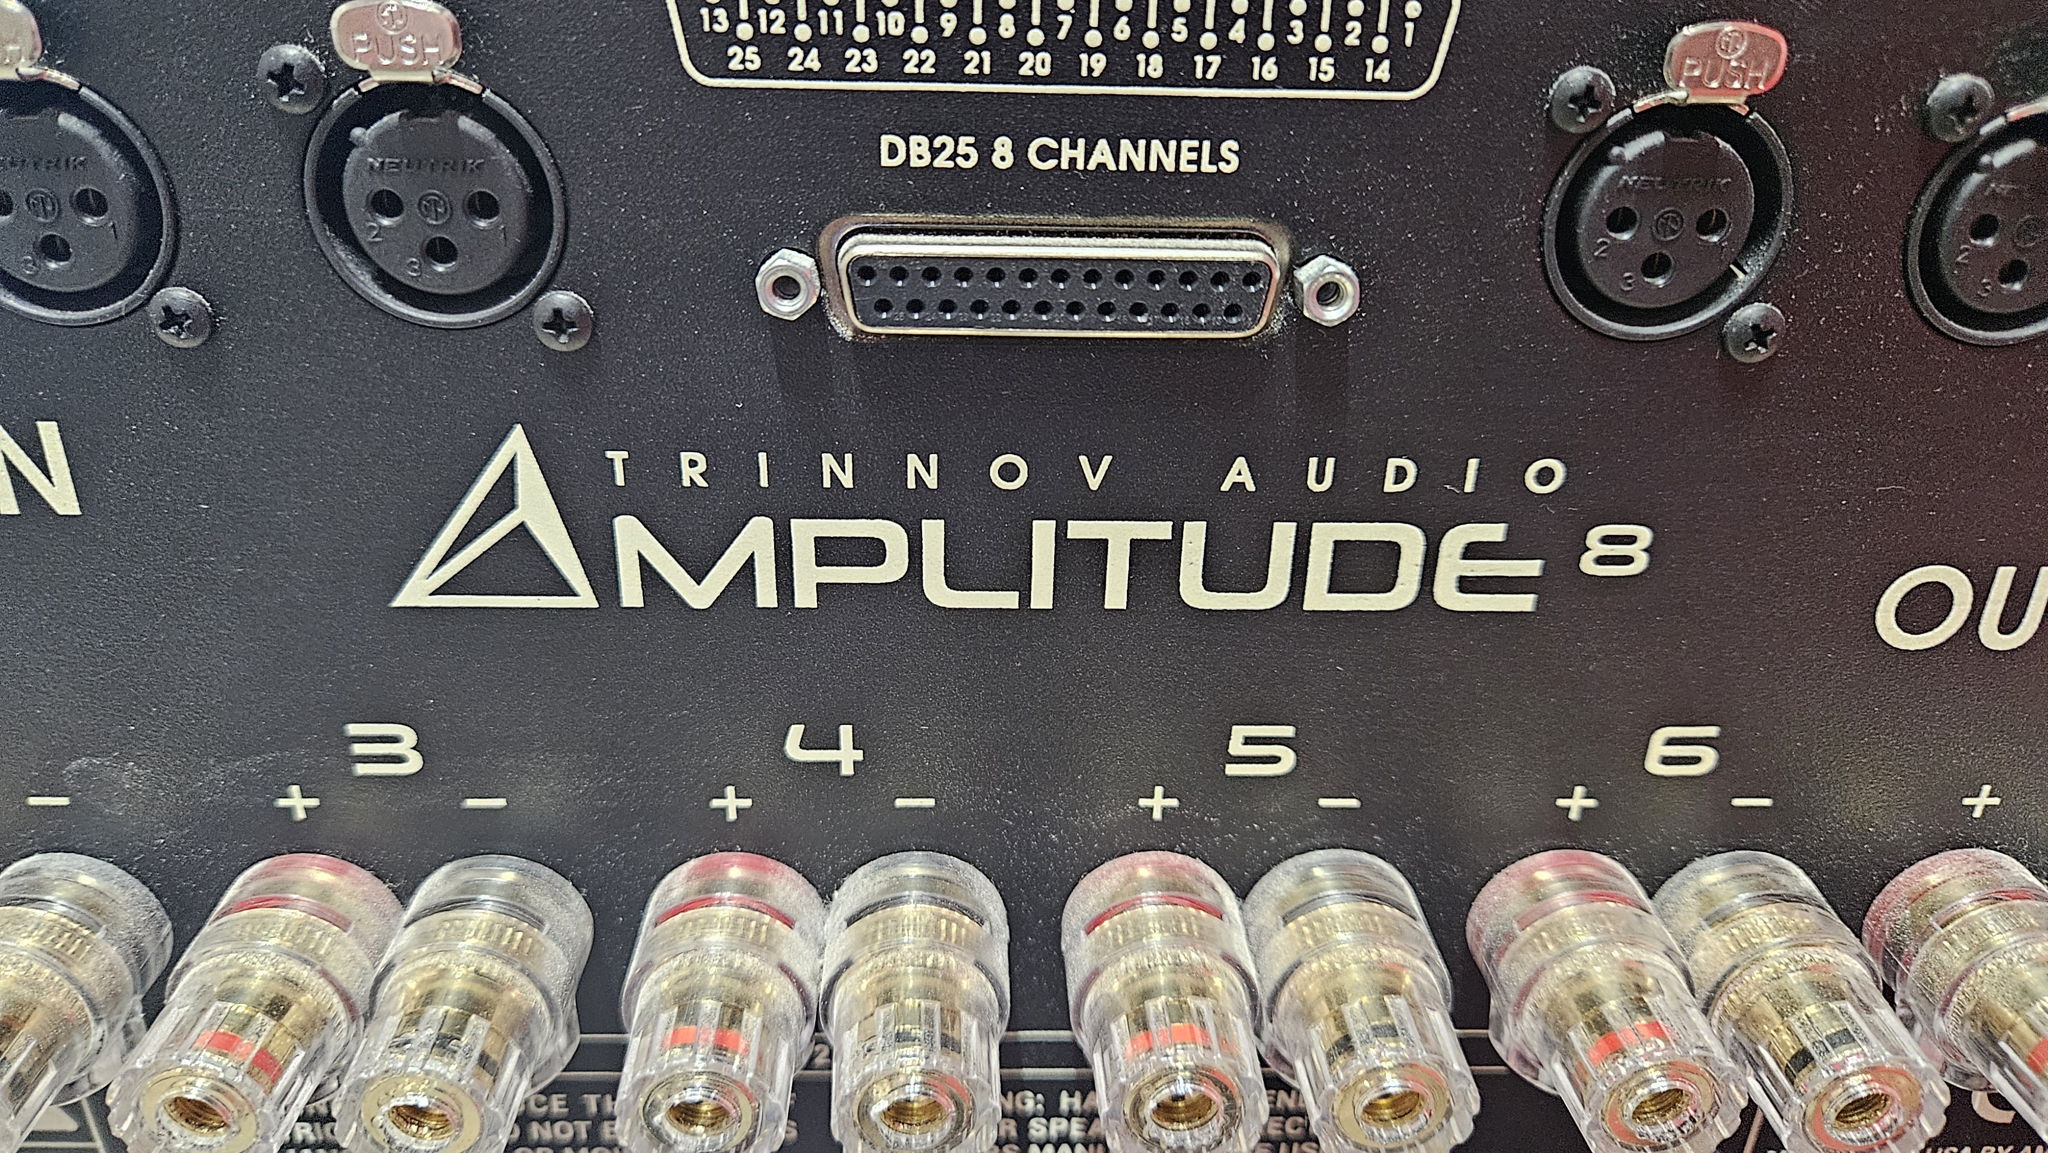 Trinnov Audio Amplitude 8 - Not the M version 6